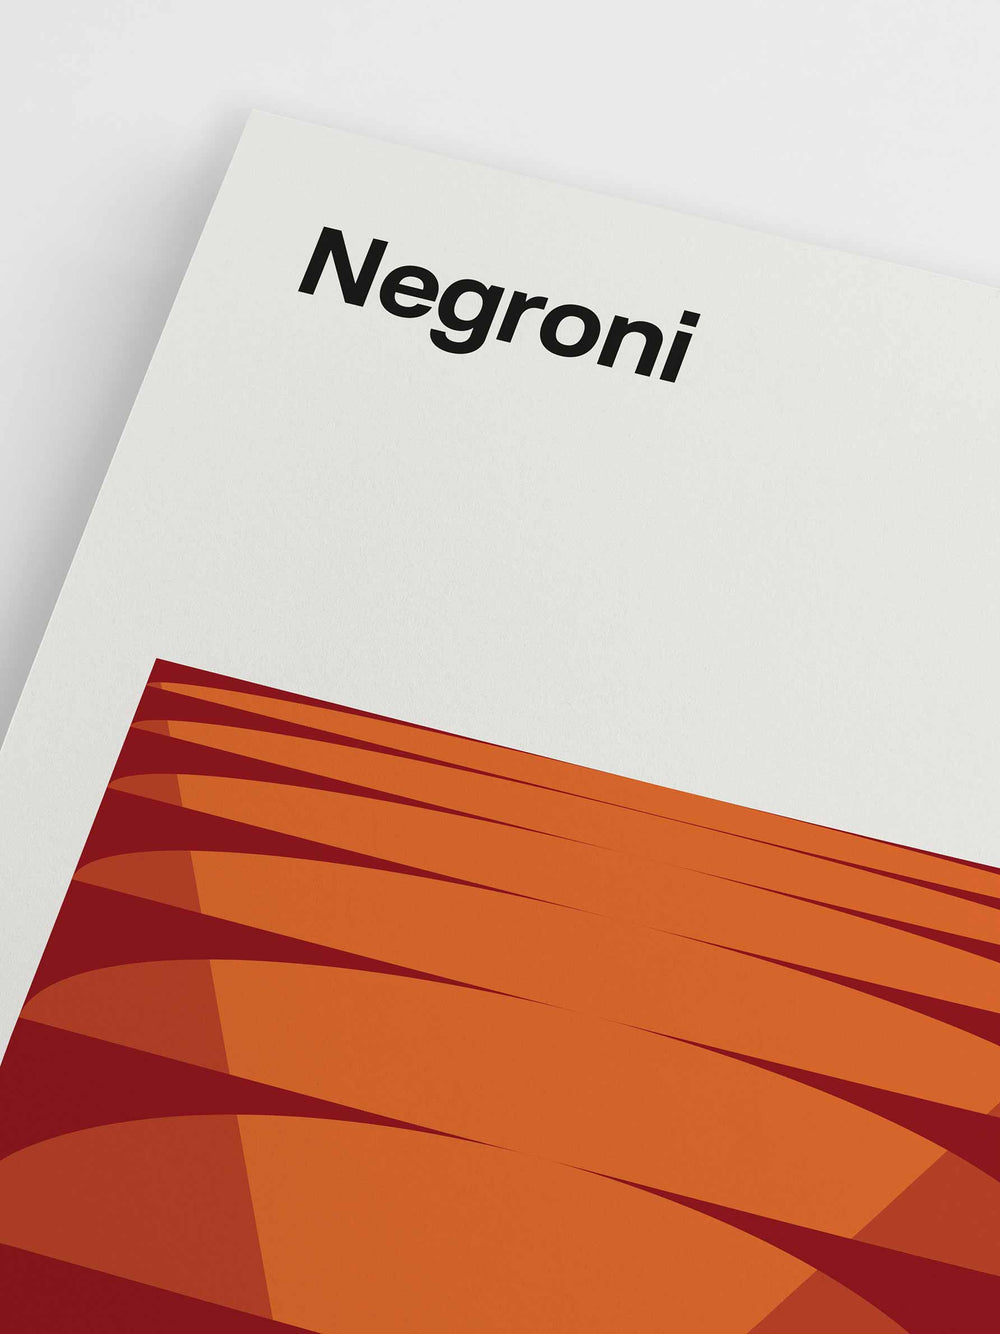 Negroni Poster | Art Print | Derrick Details